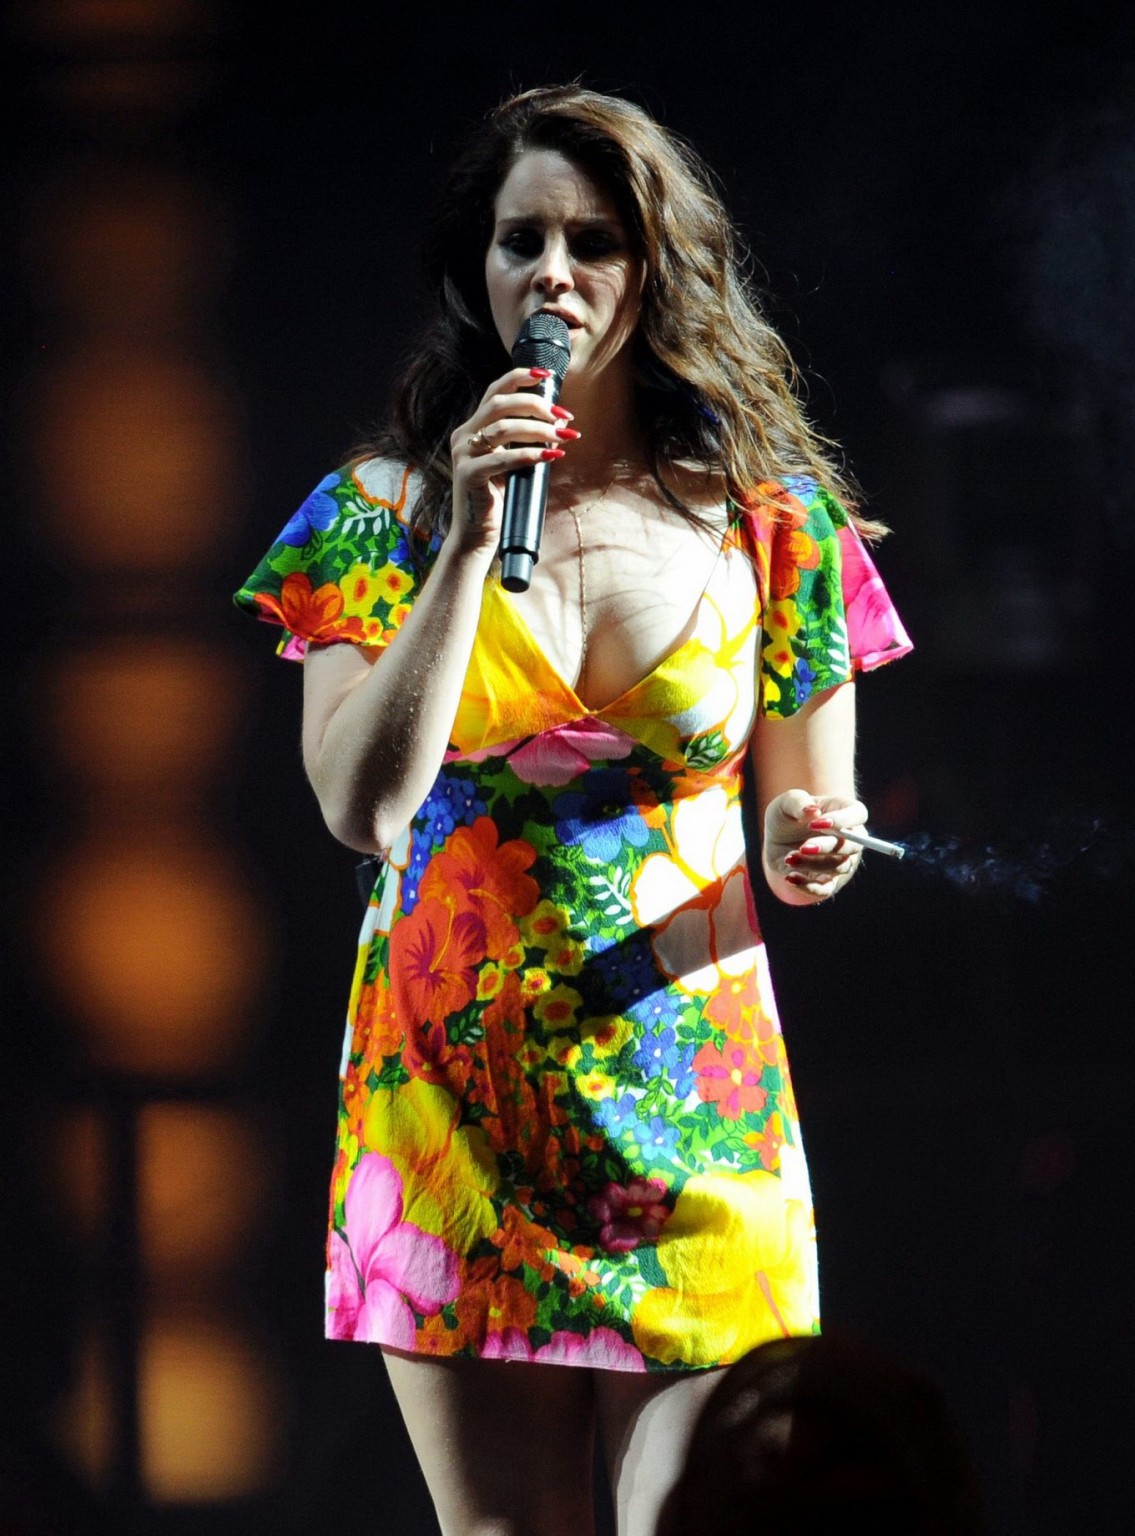 Lana Del Rey bra peek  upskirt while performing in summer mini dress at the 2014 #75196969